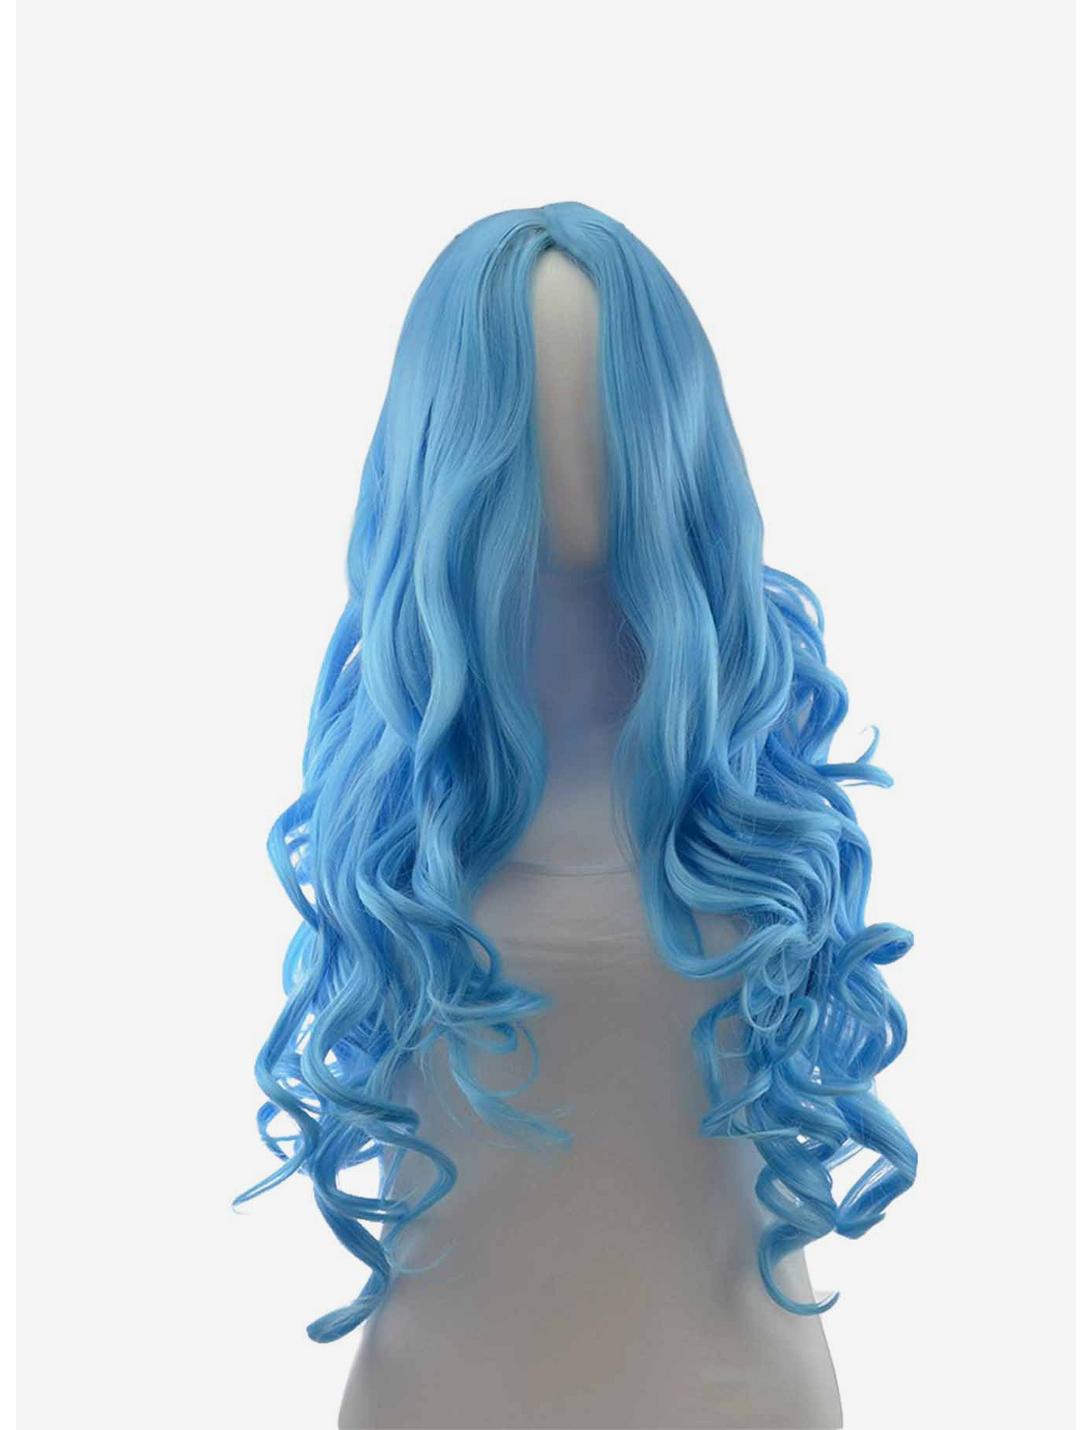 Epic Cosplay Daphne Light Blue Mix Wavy Wig, , hi-res